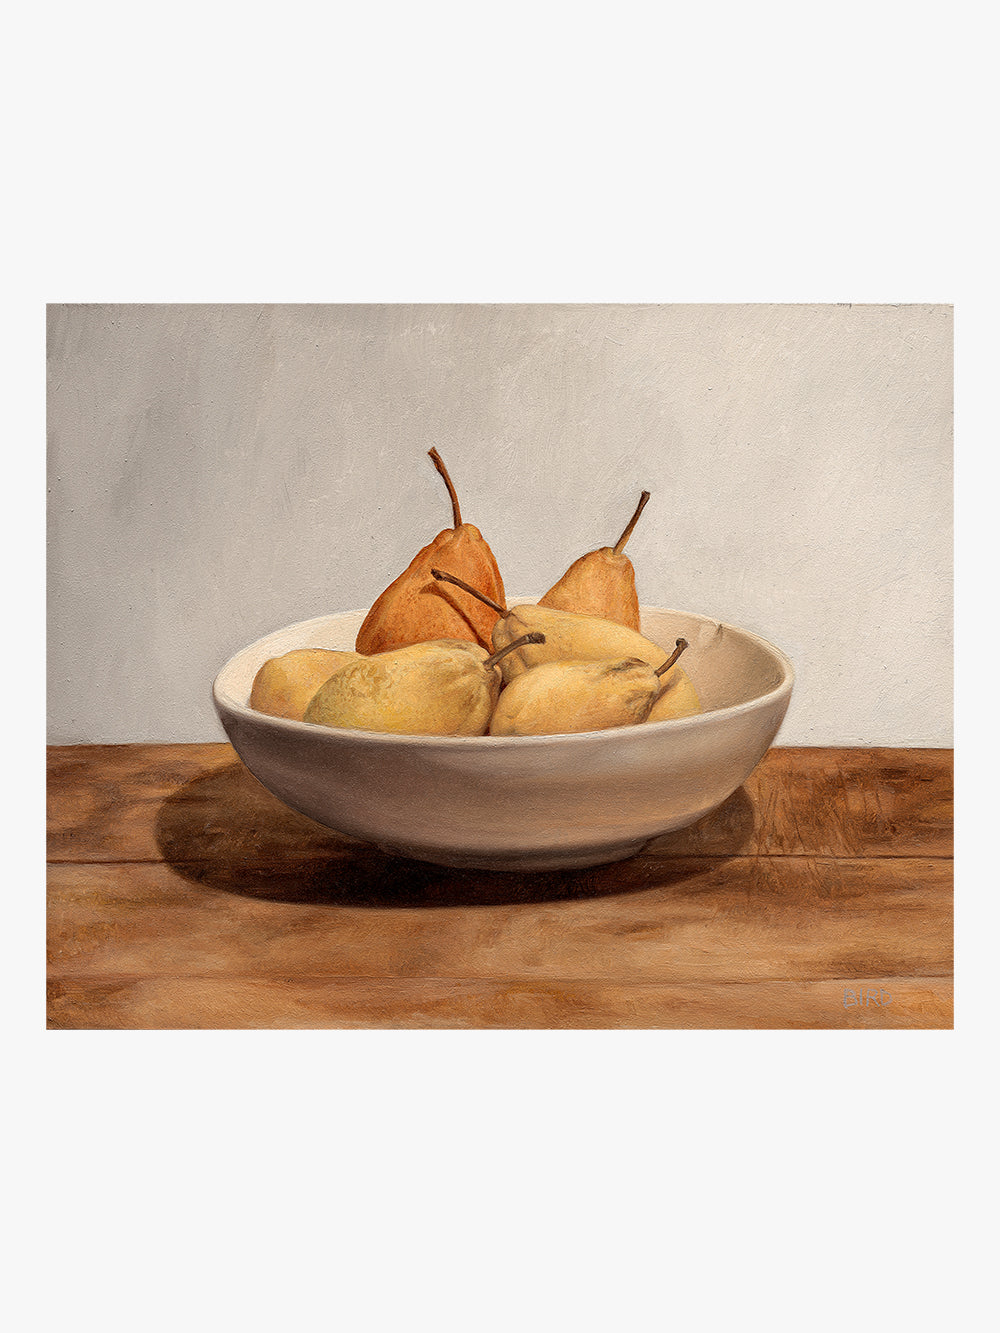 Found Art: Pears